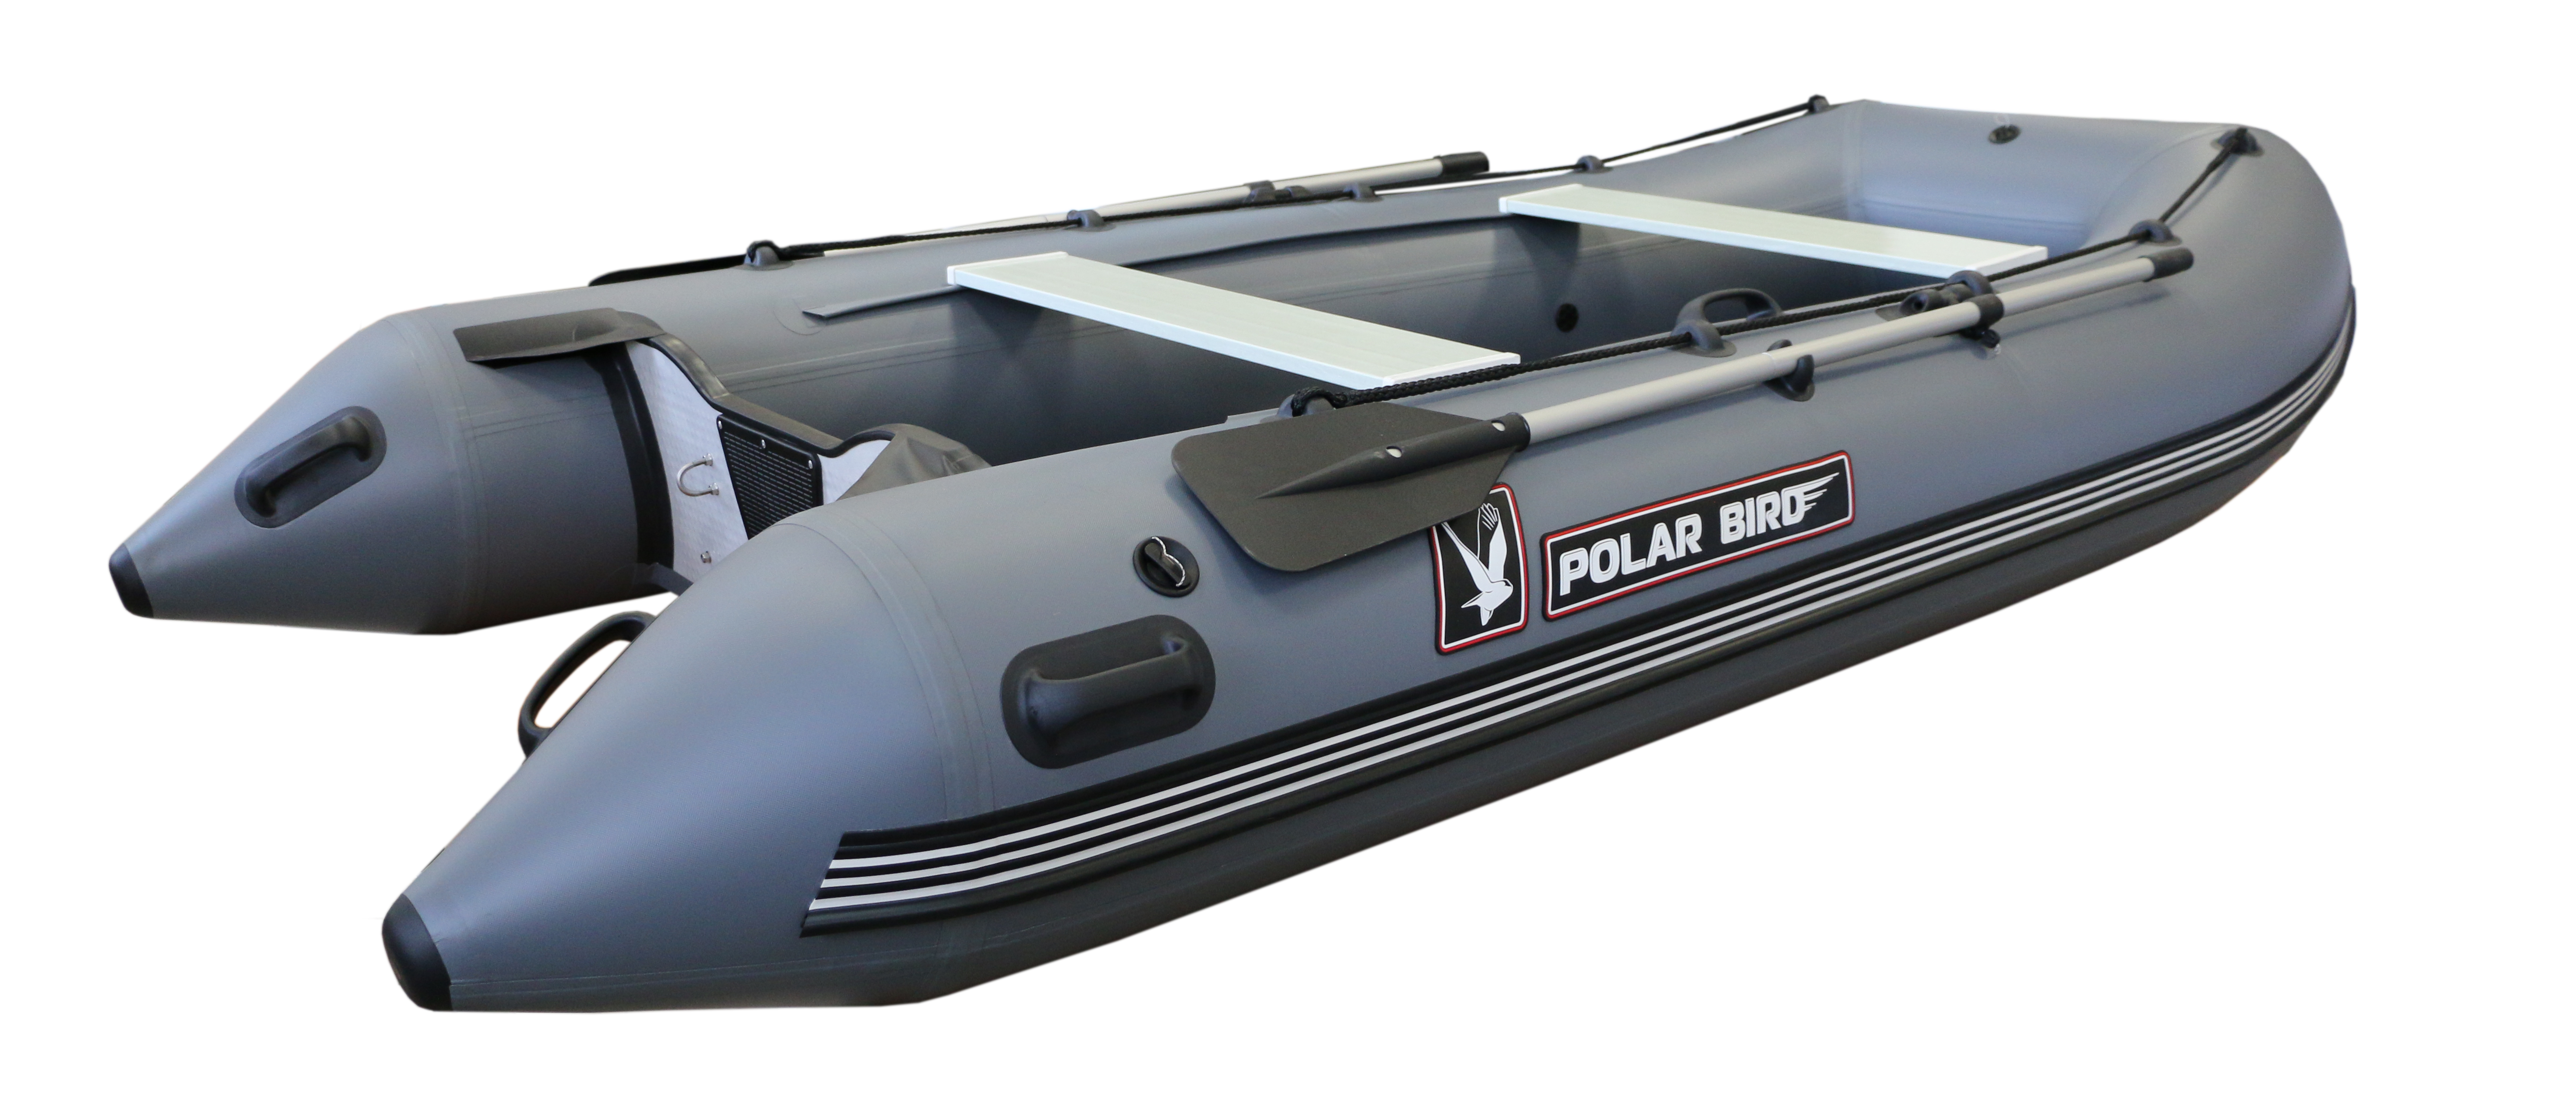 Купить лодку polar bird. Лодка Polar Bird модель PB-400e Eagle. Лодка Polar Bird 400e New Eagle. Лодок ПВХ Полар Берд 400. Polar Bird 380e Eagle Орлан.